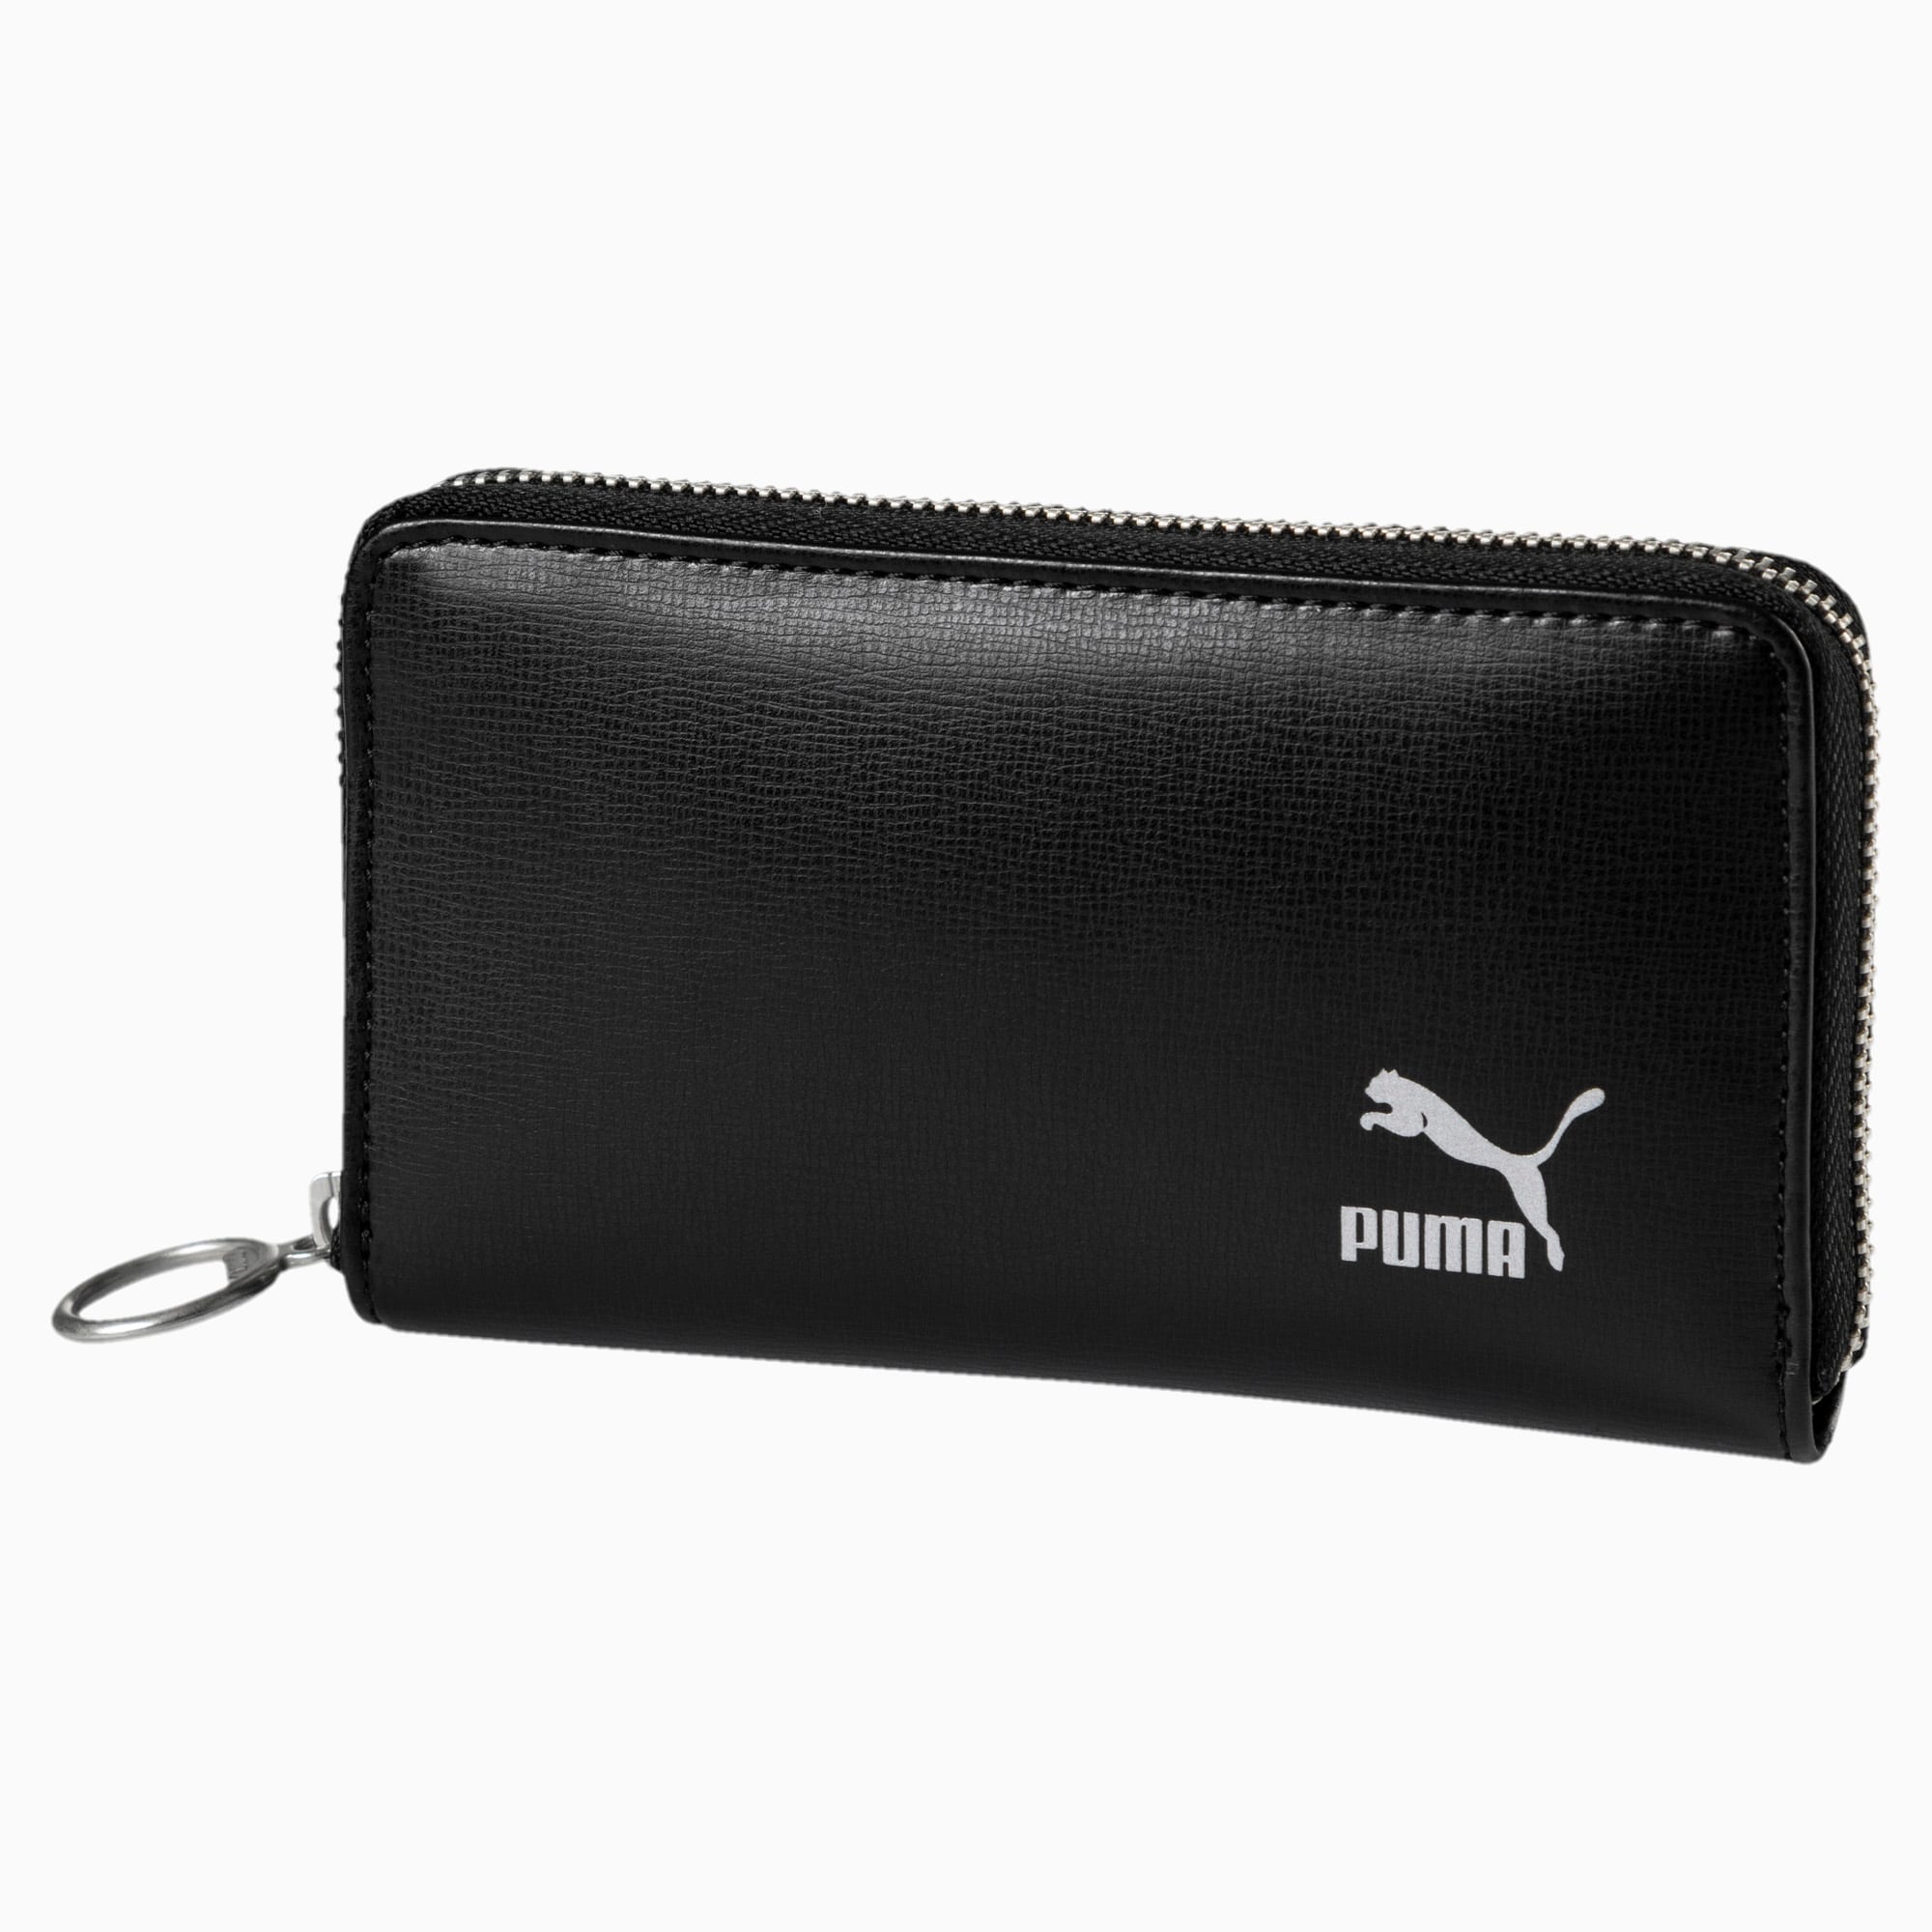 puma zip wallet